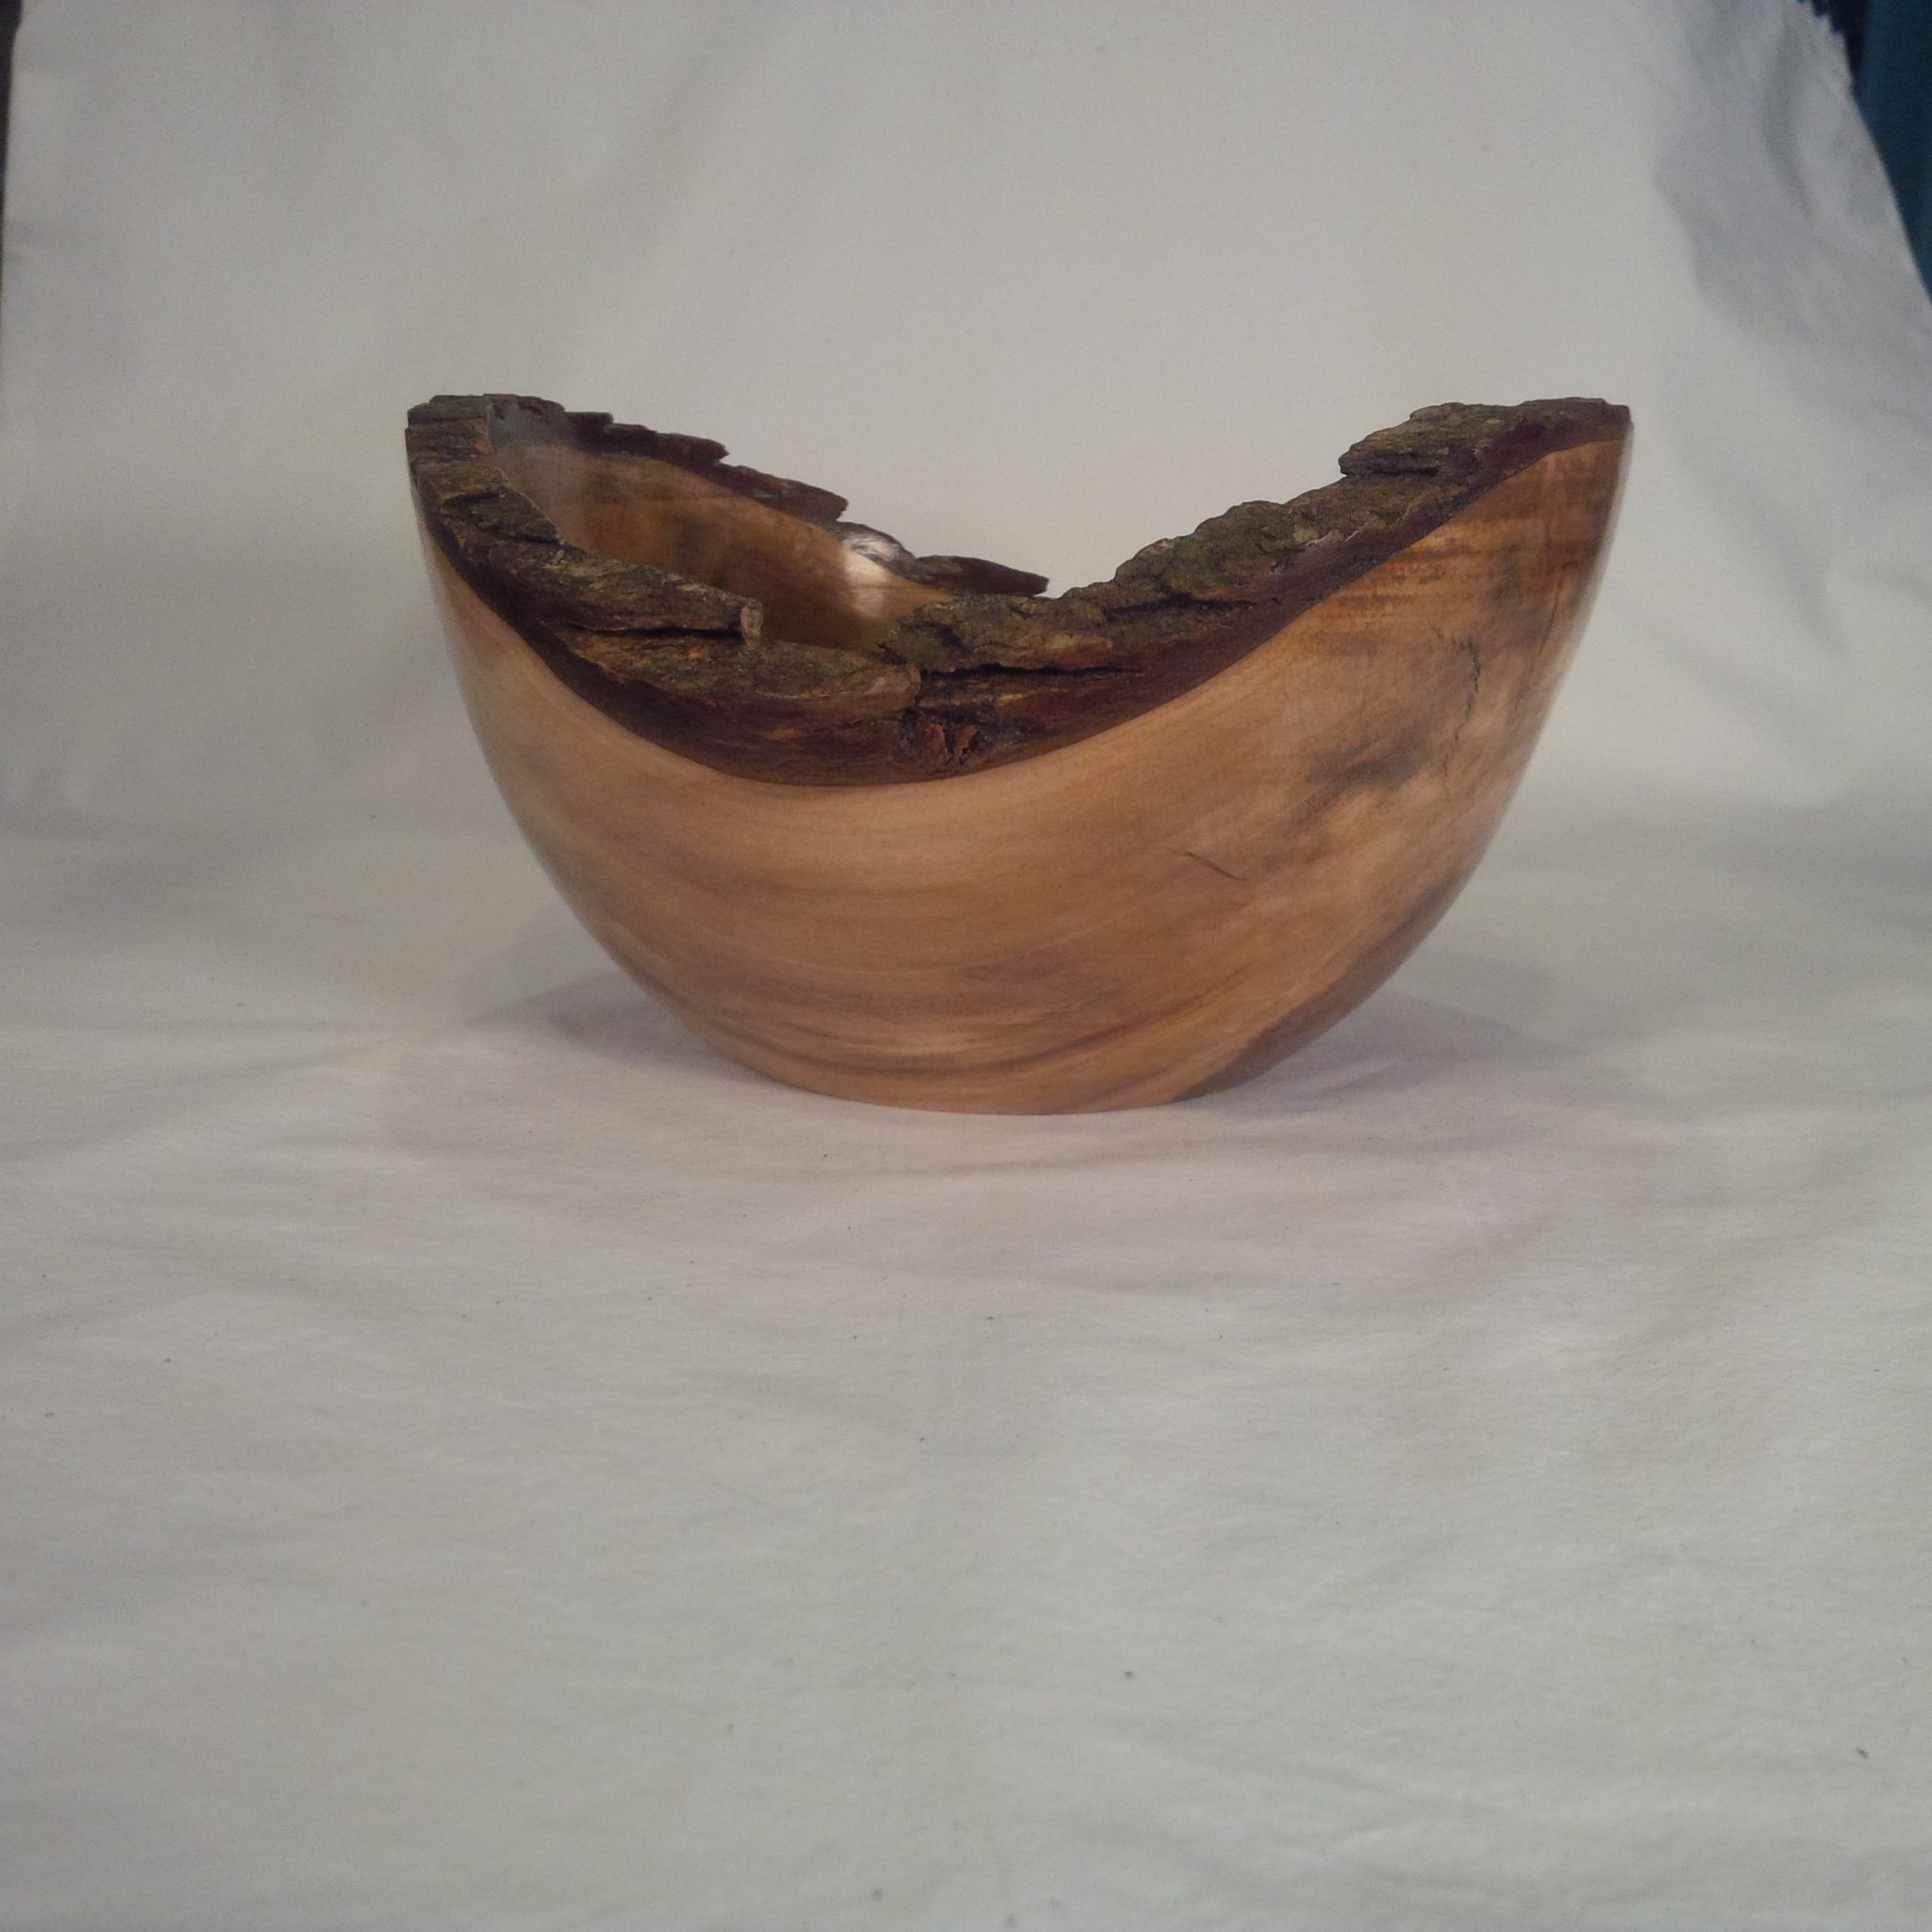 Backyard oak turned into live edge bowl